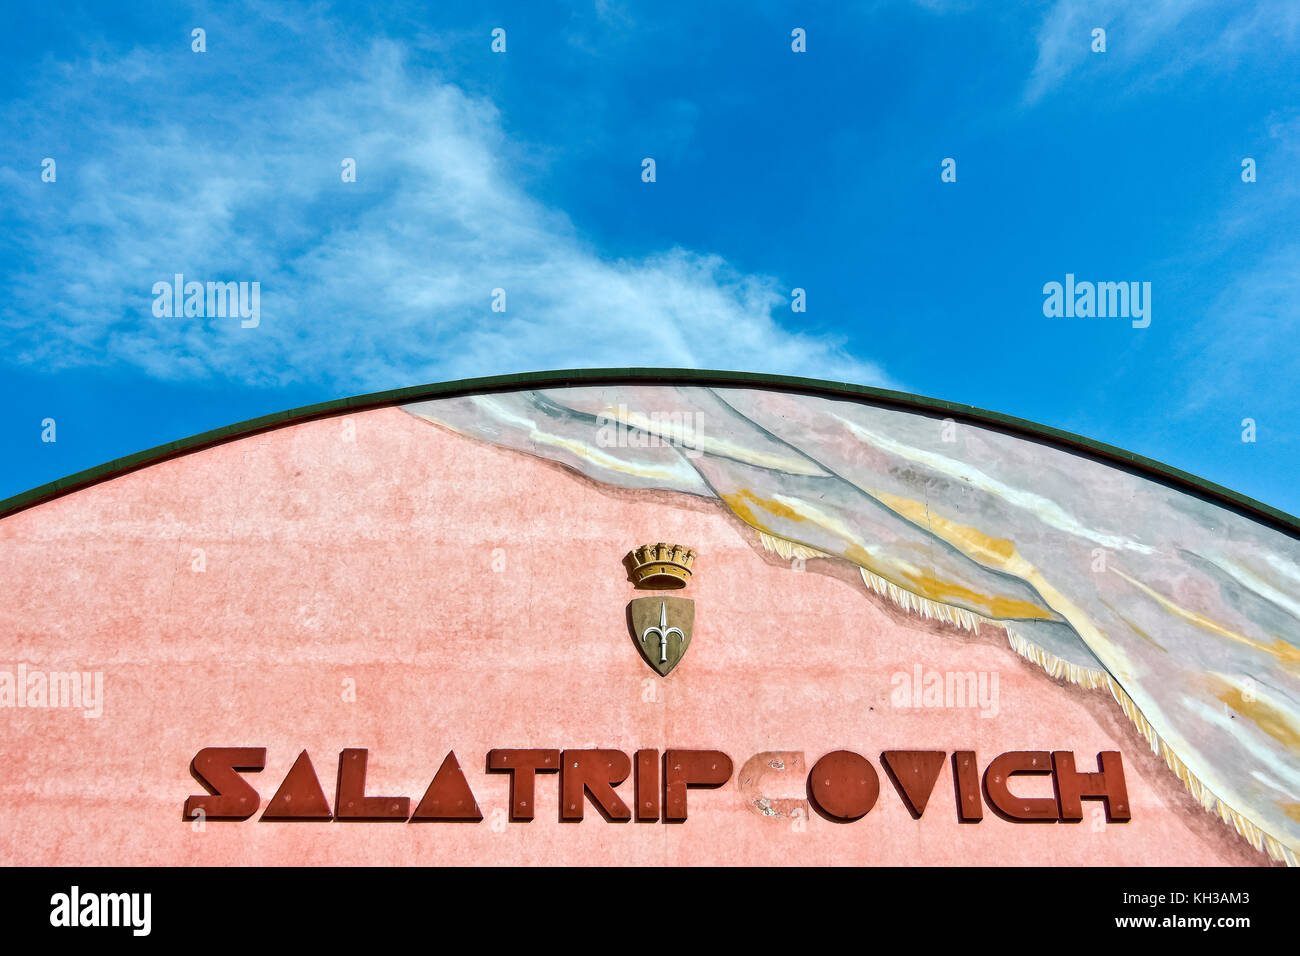 Theatre Sala Tripcovich, front view. Formerly coach station. Trieste, Friuli Venezia Giulia, Italy, Europe. Off the beaten track. Blue sky, copy space Stock Photo